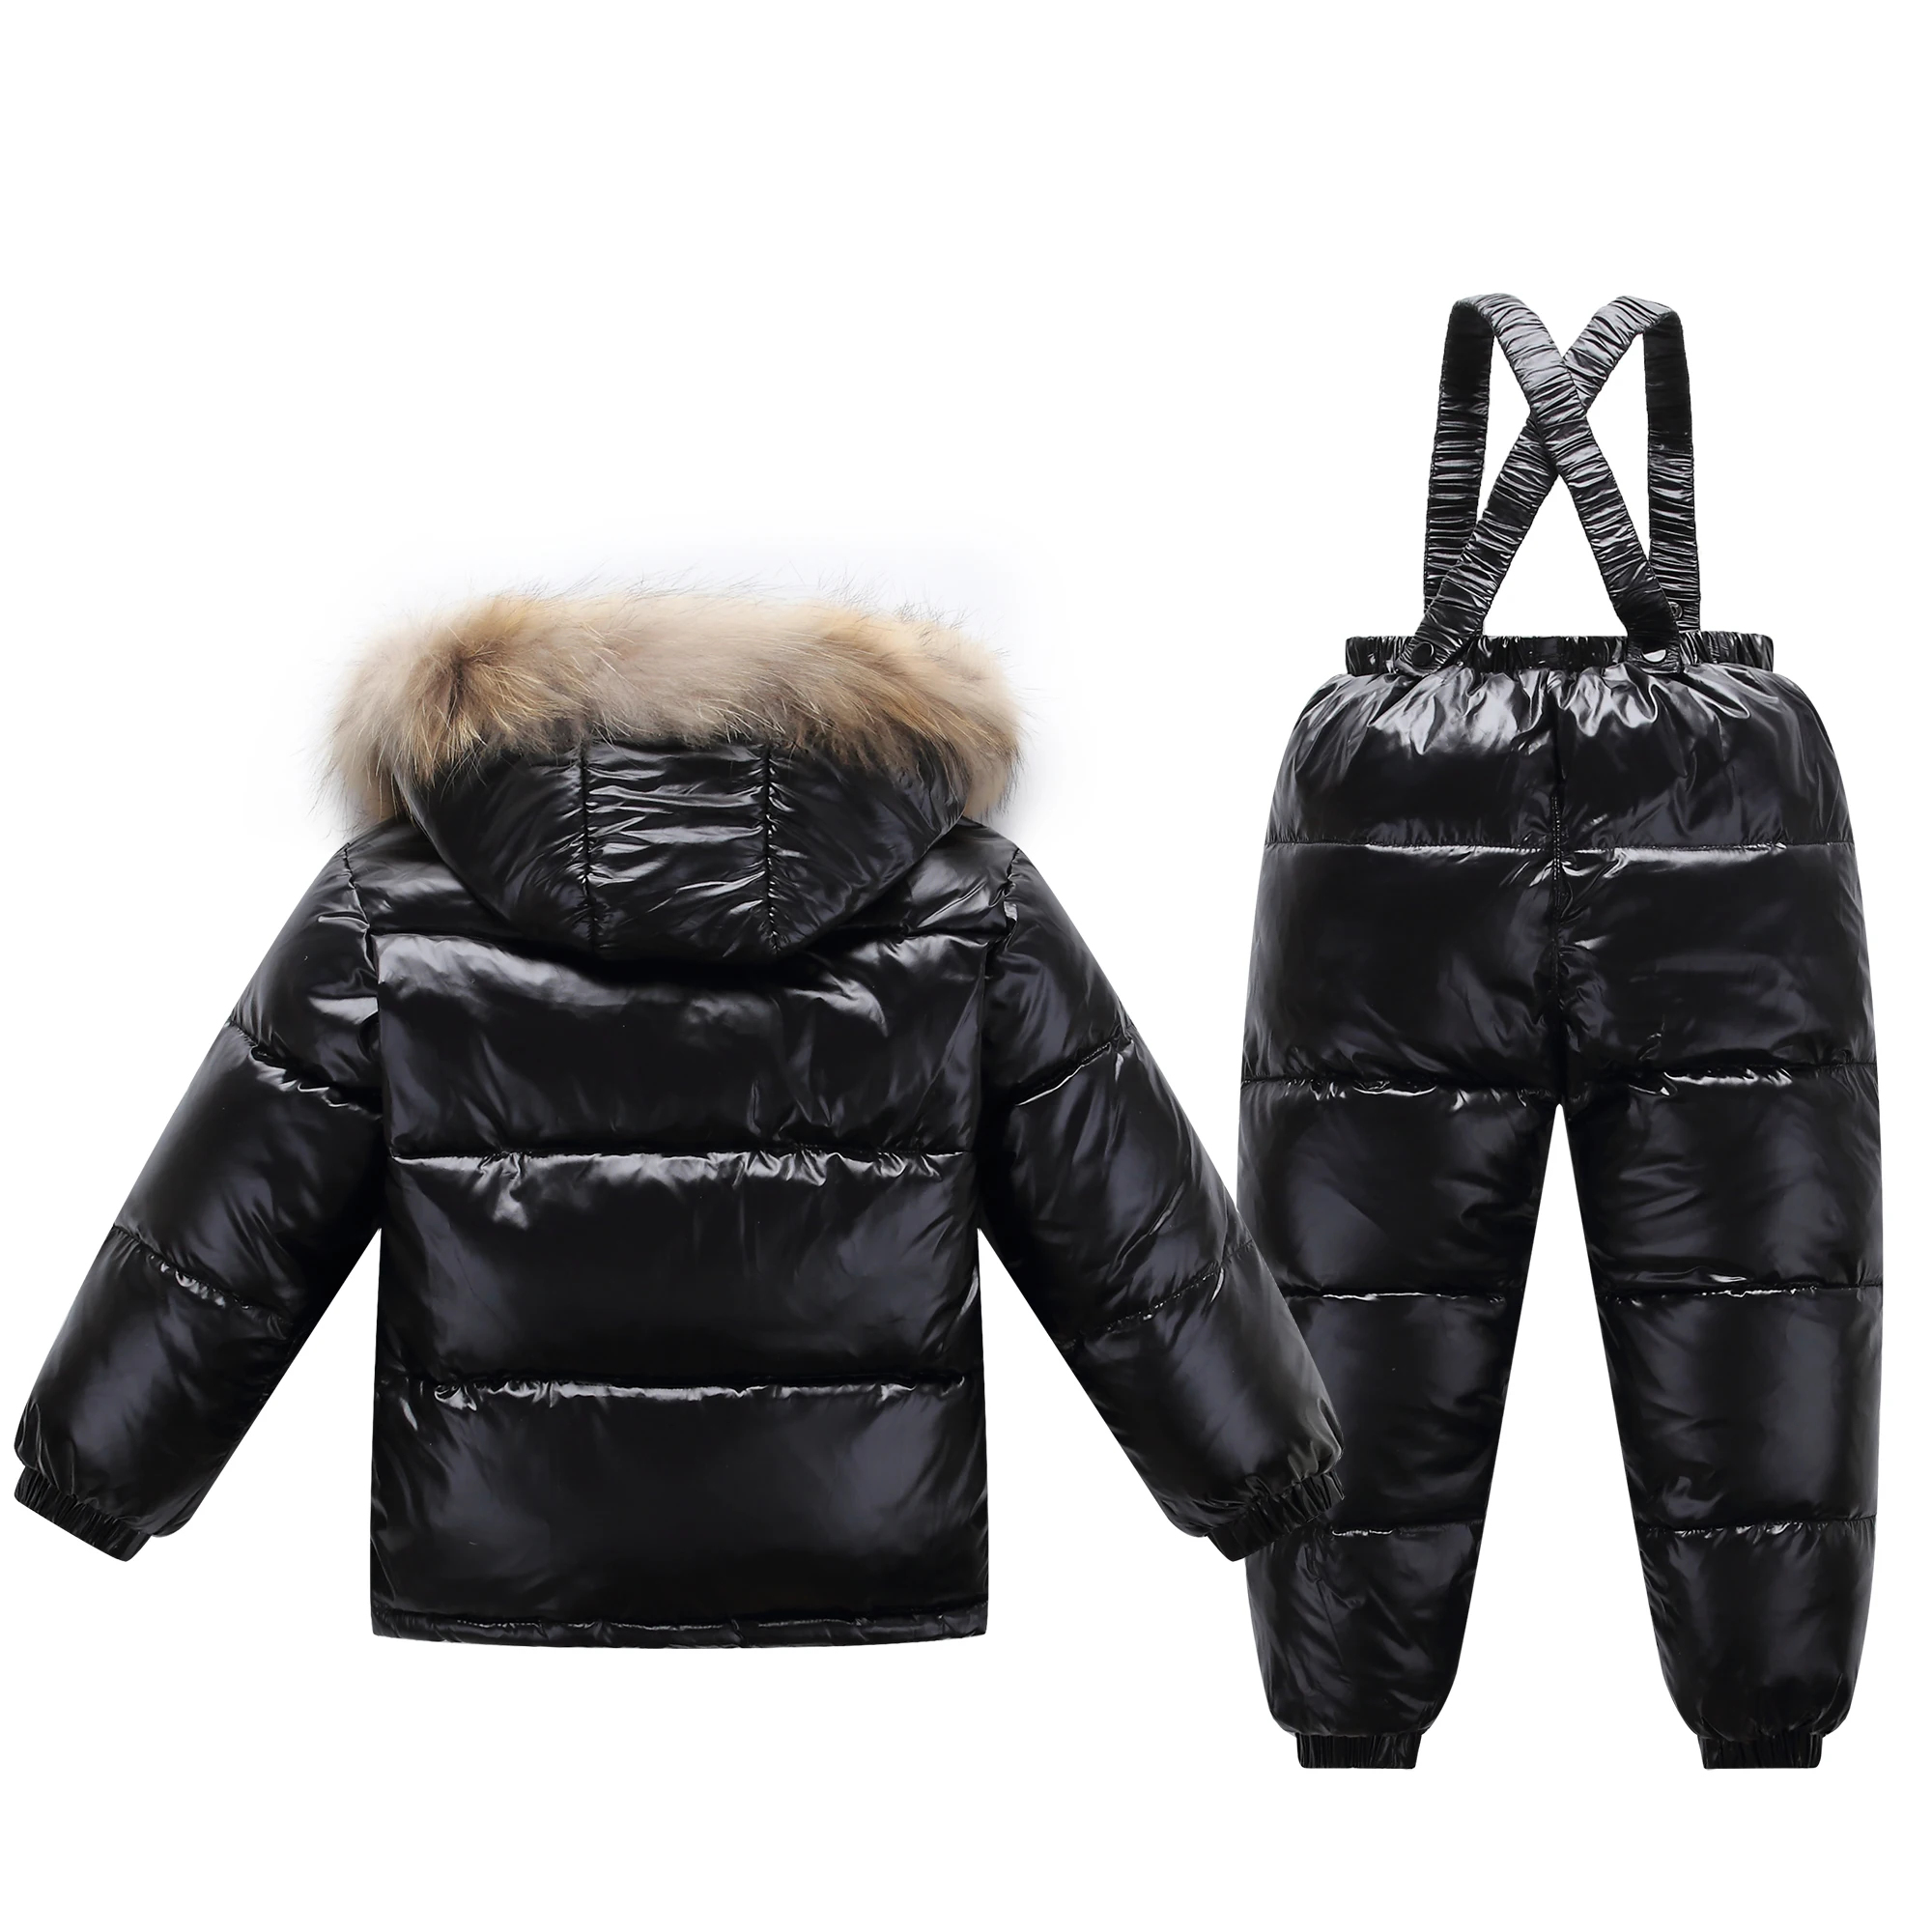 Russian winter children's clothing fashion shiny jackets for girls child coat boys winter jacket+ pant waterproof snow wear